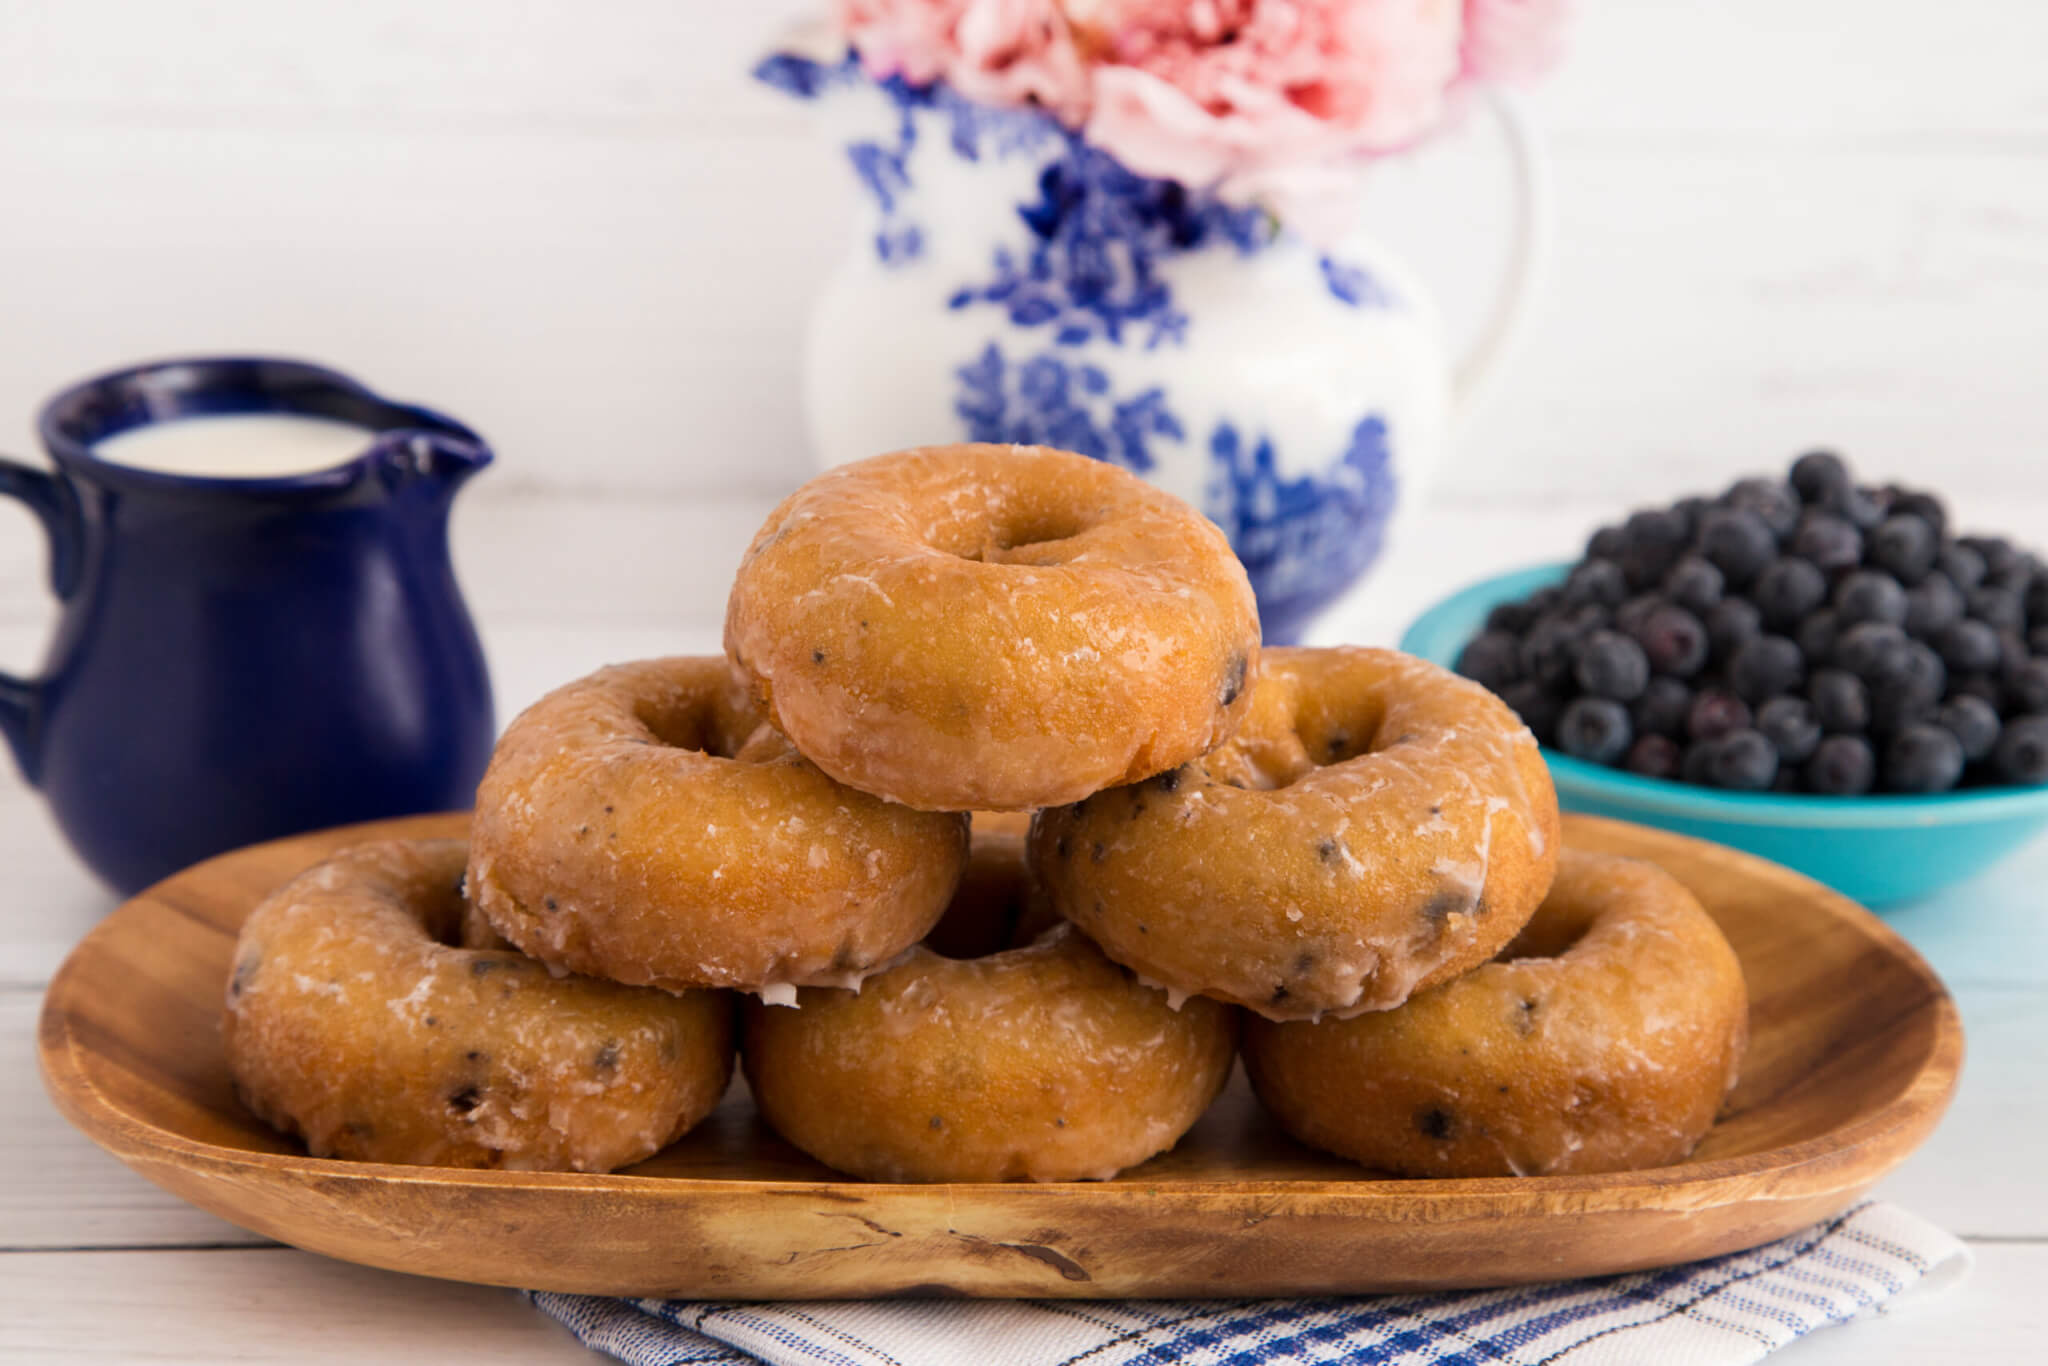 Glazed blueberry donuts